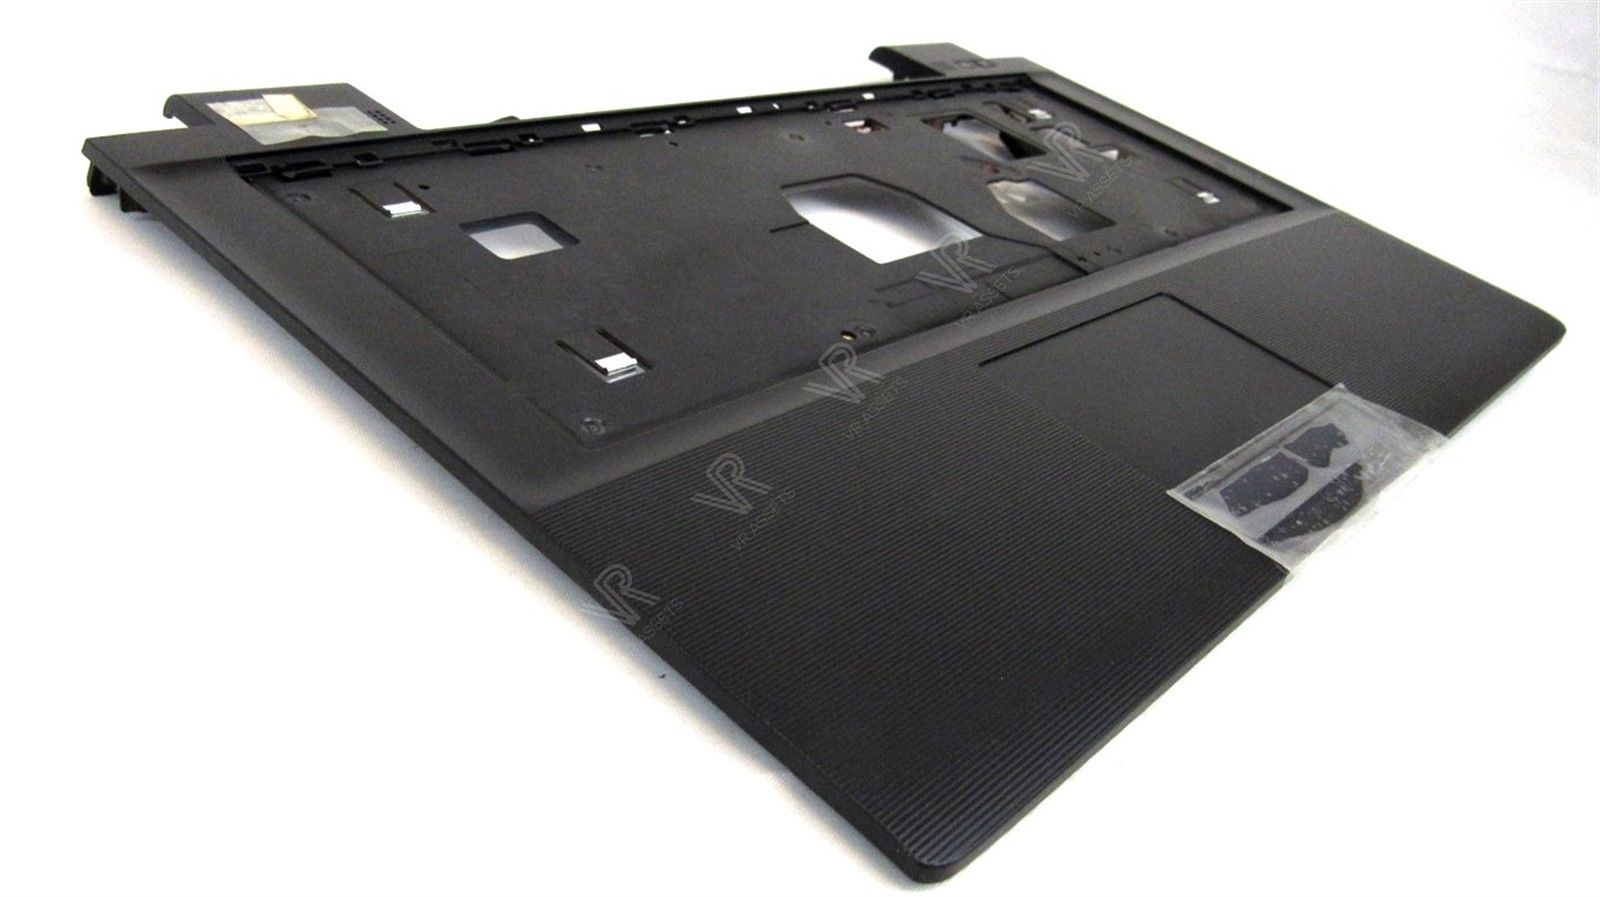 Toshiba Satellite R845-S80 Palmrest with TouchPad Black GM903128211A P000545850